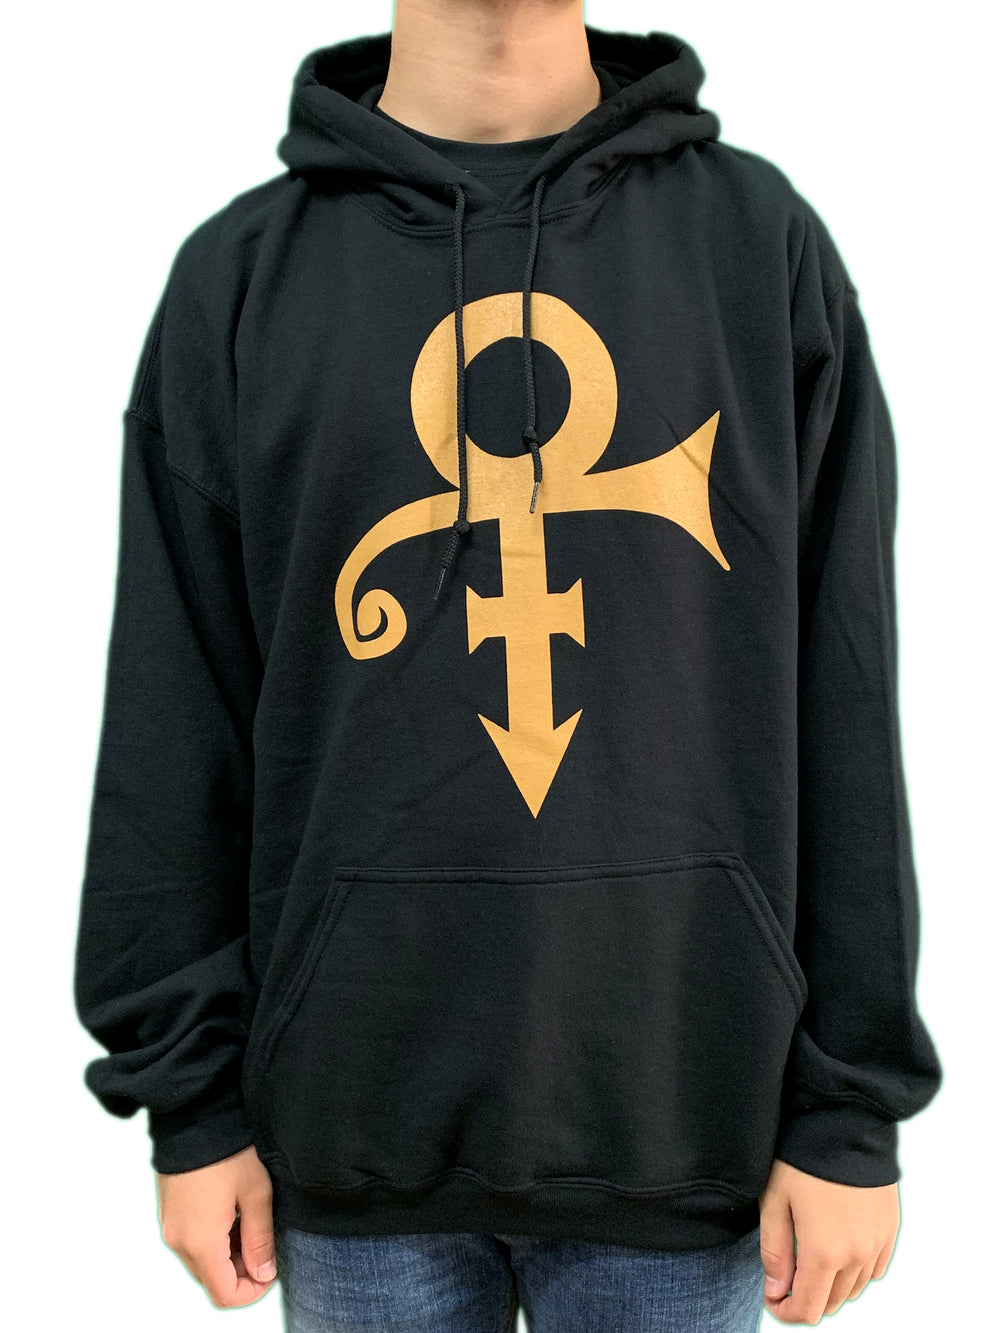 Prince – Love Symbol Unisex Official Bravado Hoodie Brand New Black NEW